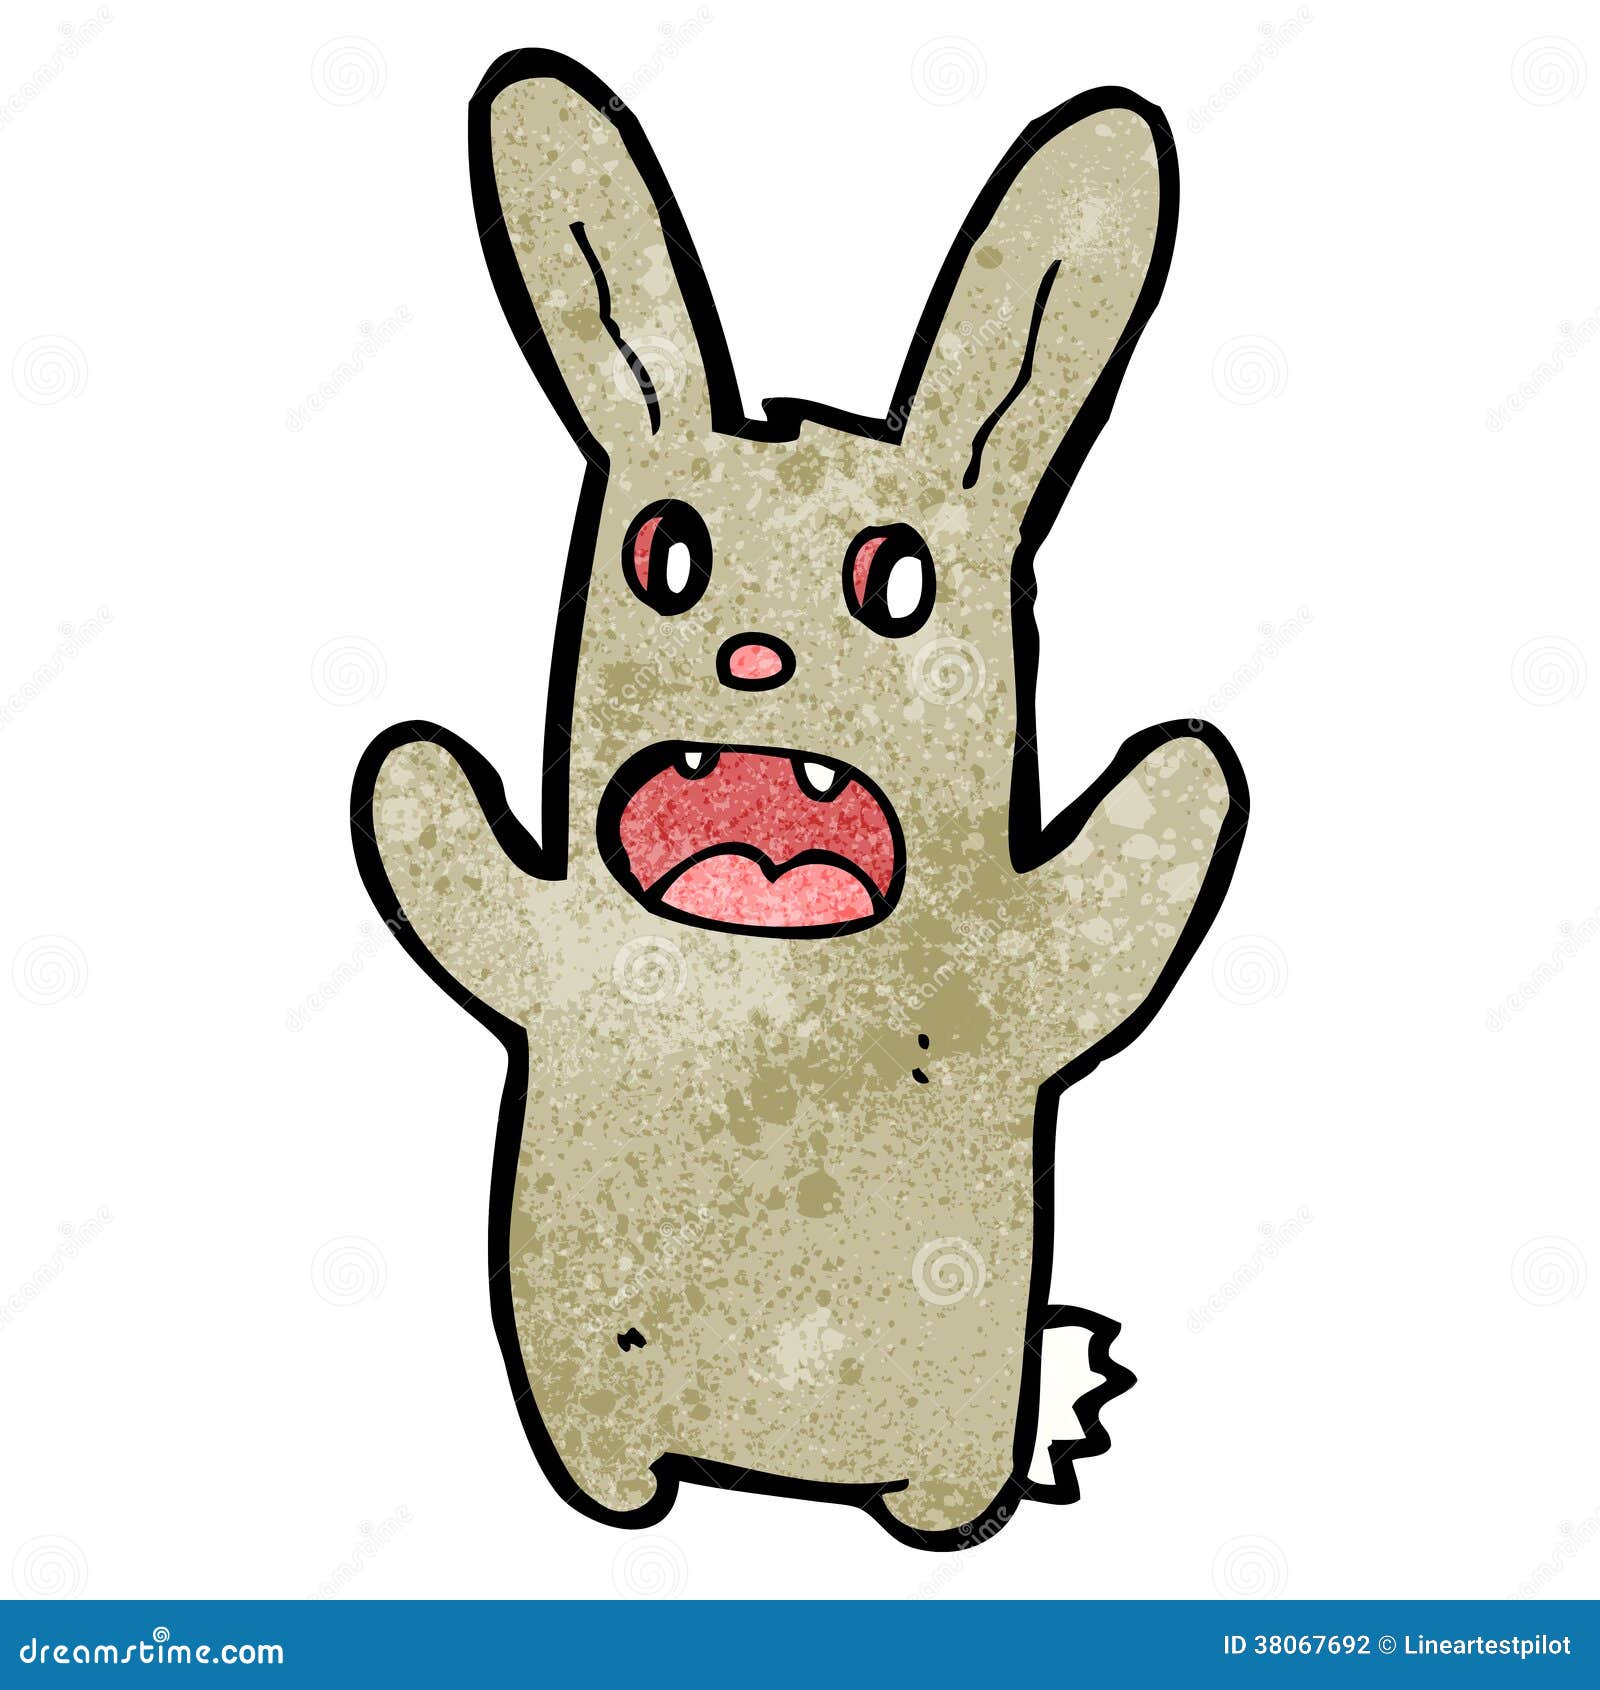 https://thumbs.dreamstime.com/z/spooky-zombie-bunny-cartoon-38067692.jpg